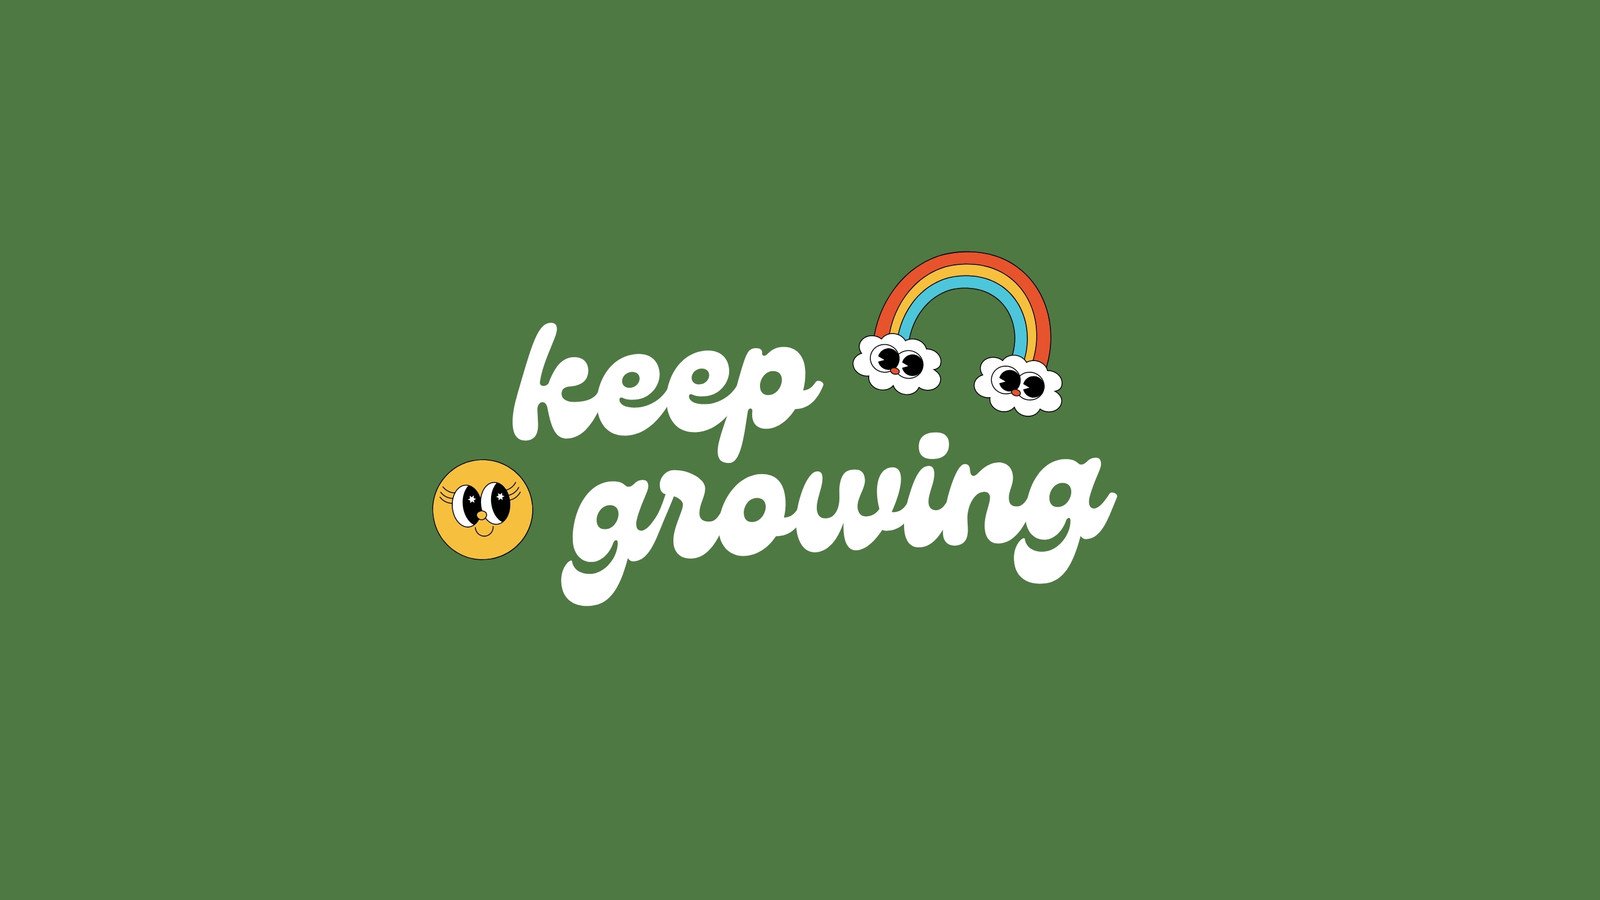 A logo for keep growing - Light green